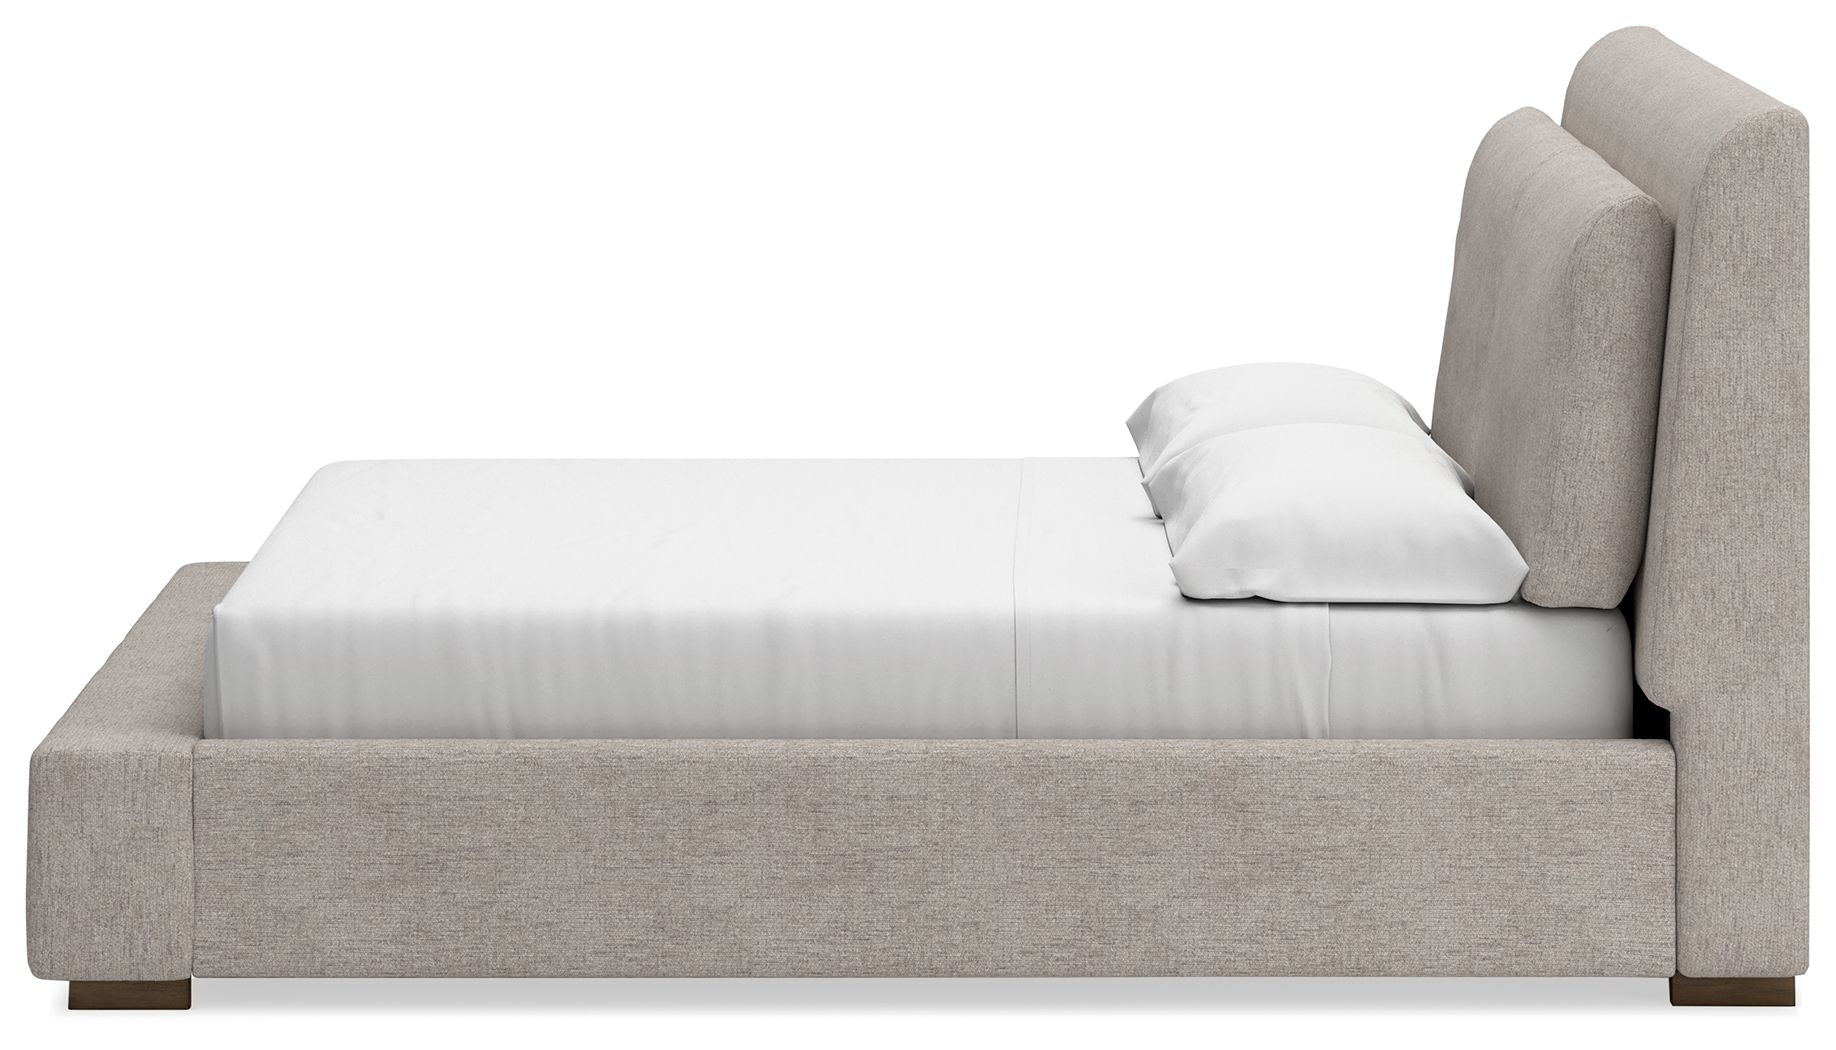 Cabalynn - Upholstered Bed